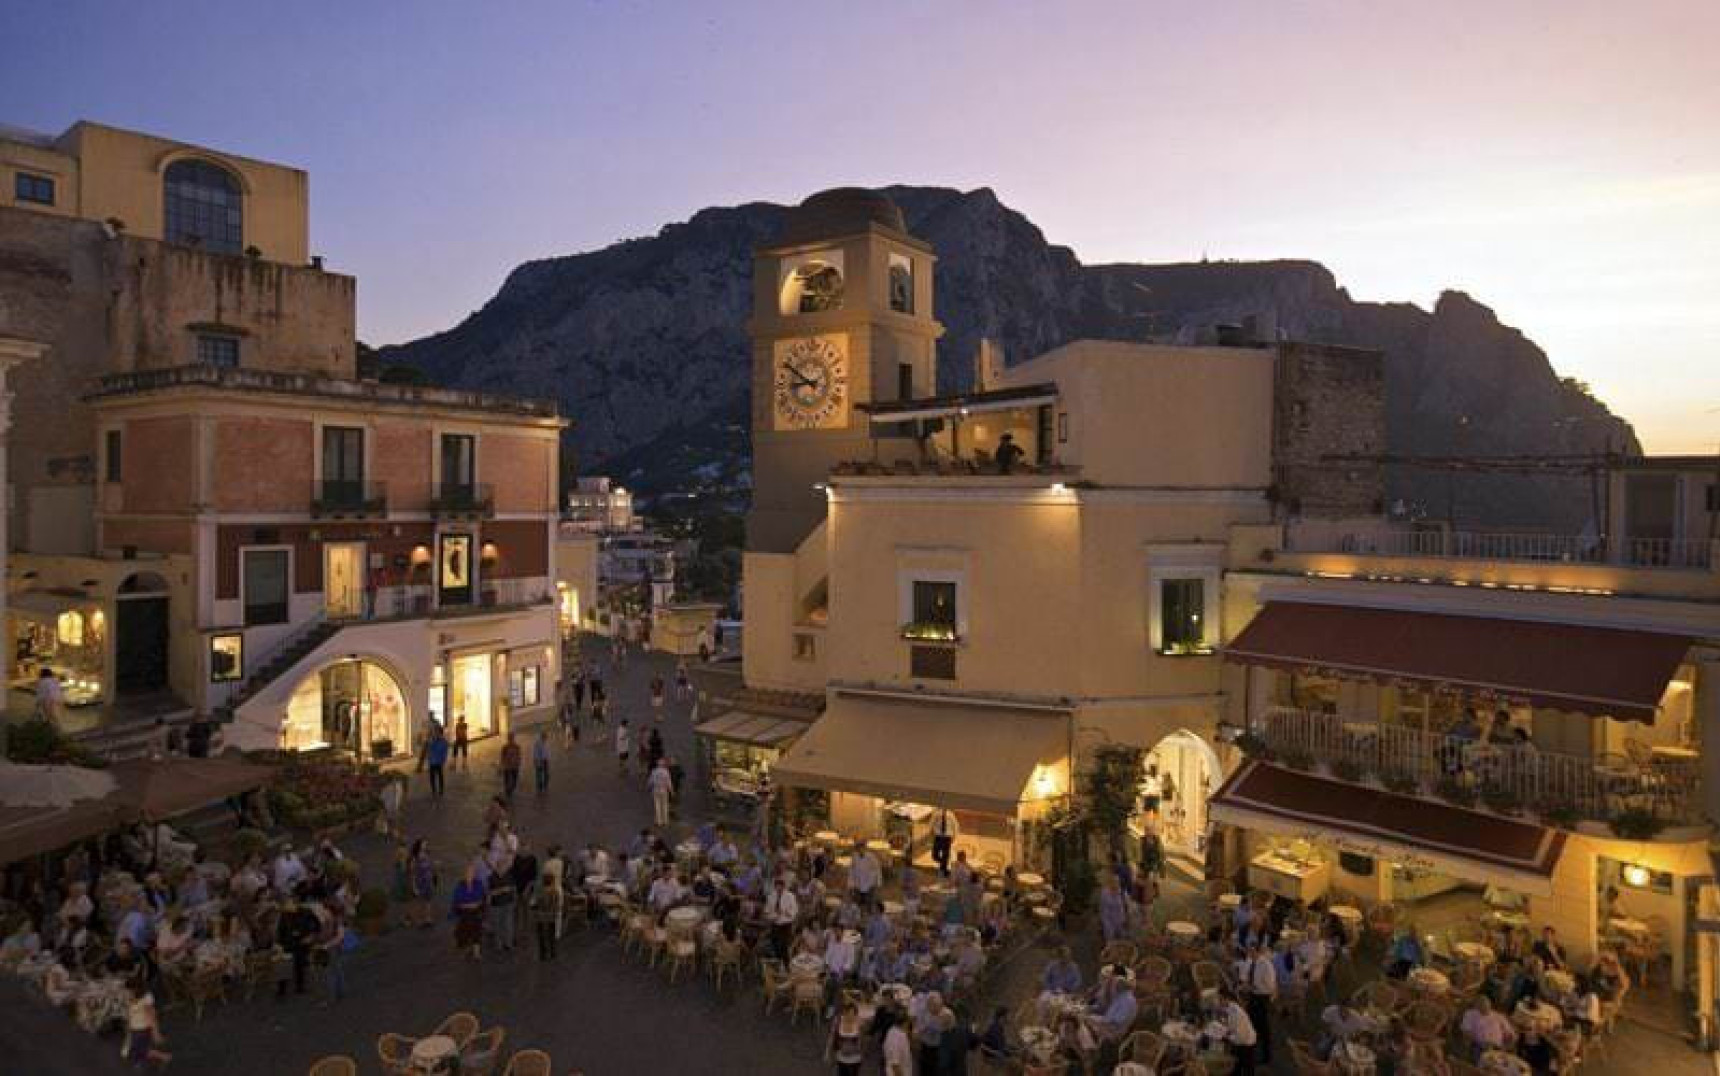 The Piazzetta in Capri. Image Credit: Capri.com